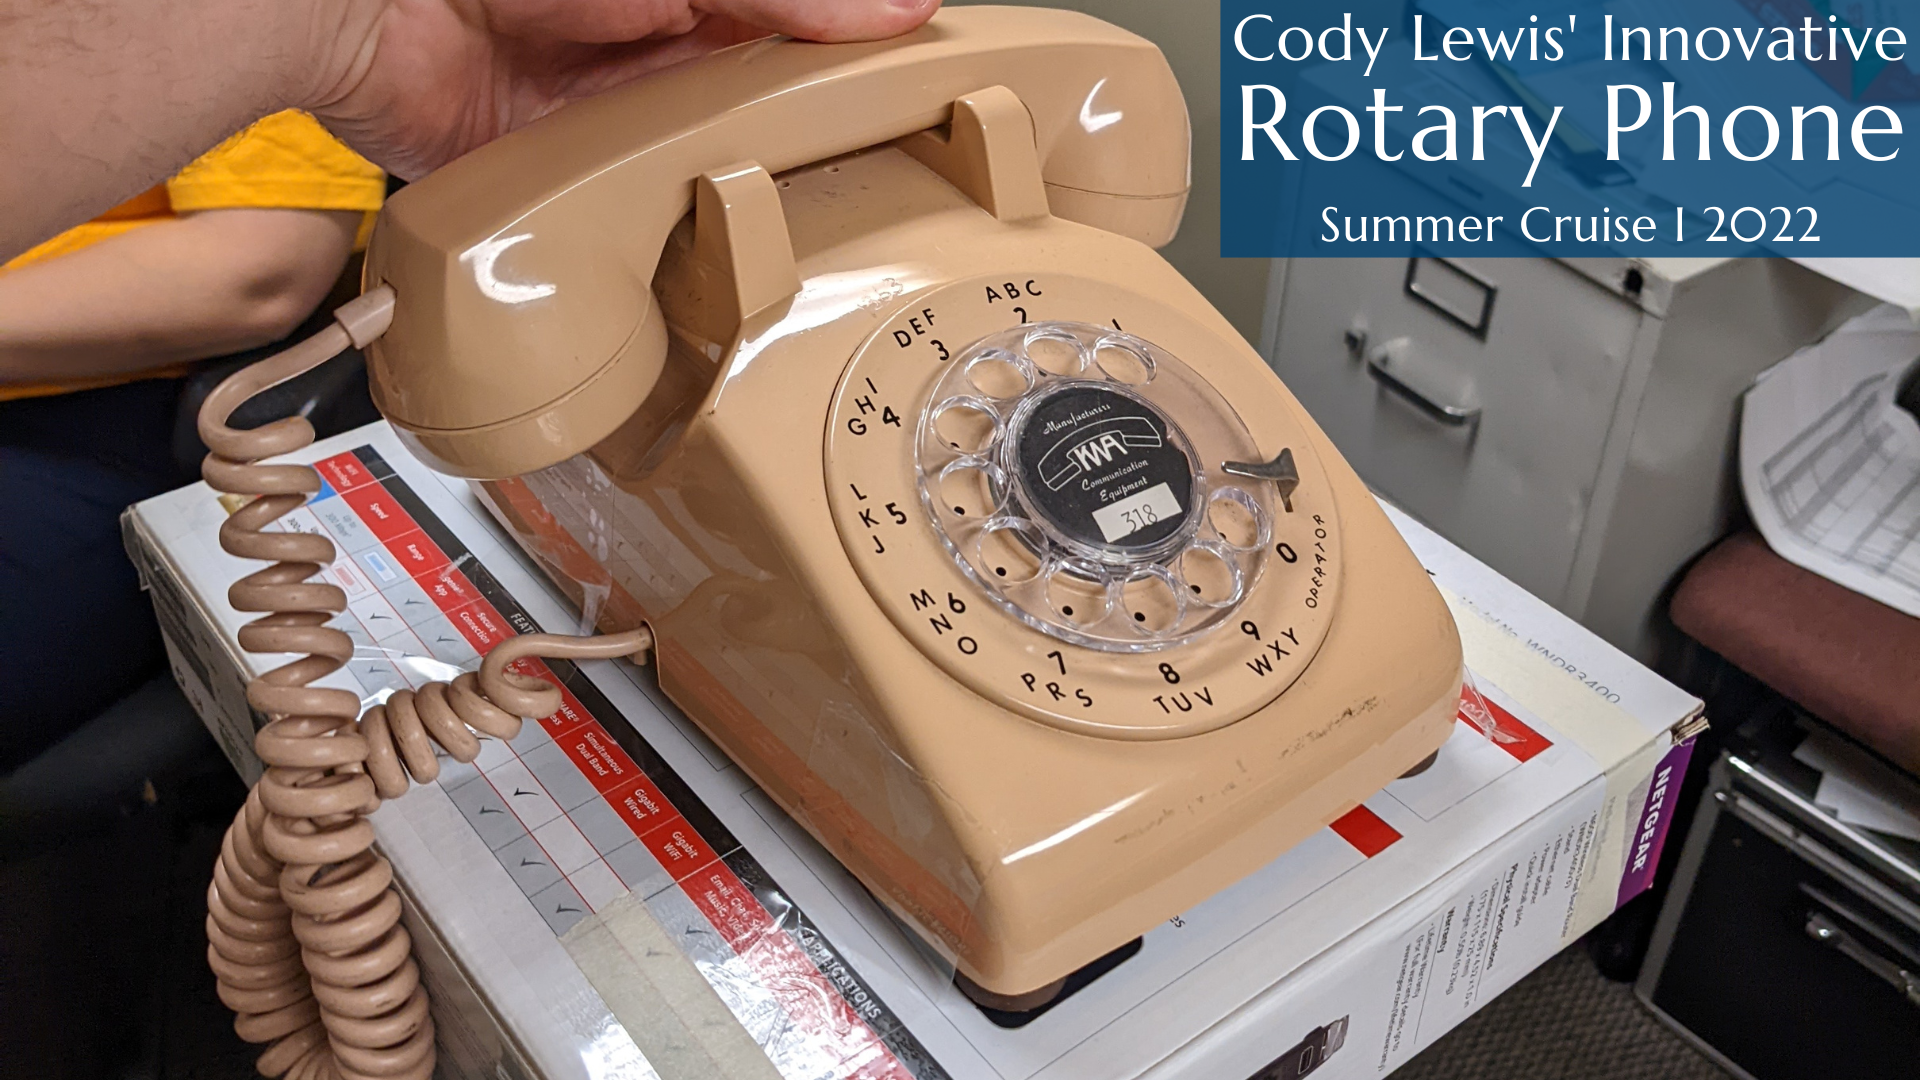 Cody Lewis' Innovative Rotary Phone on Summer Cruise I 2022